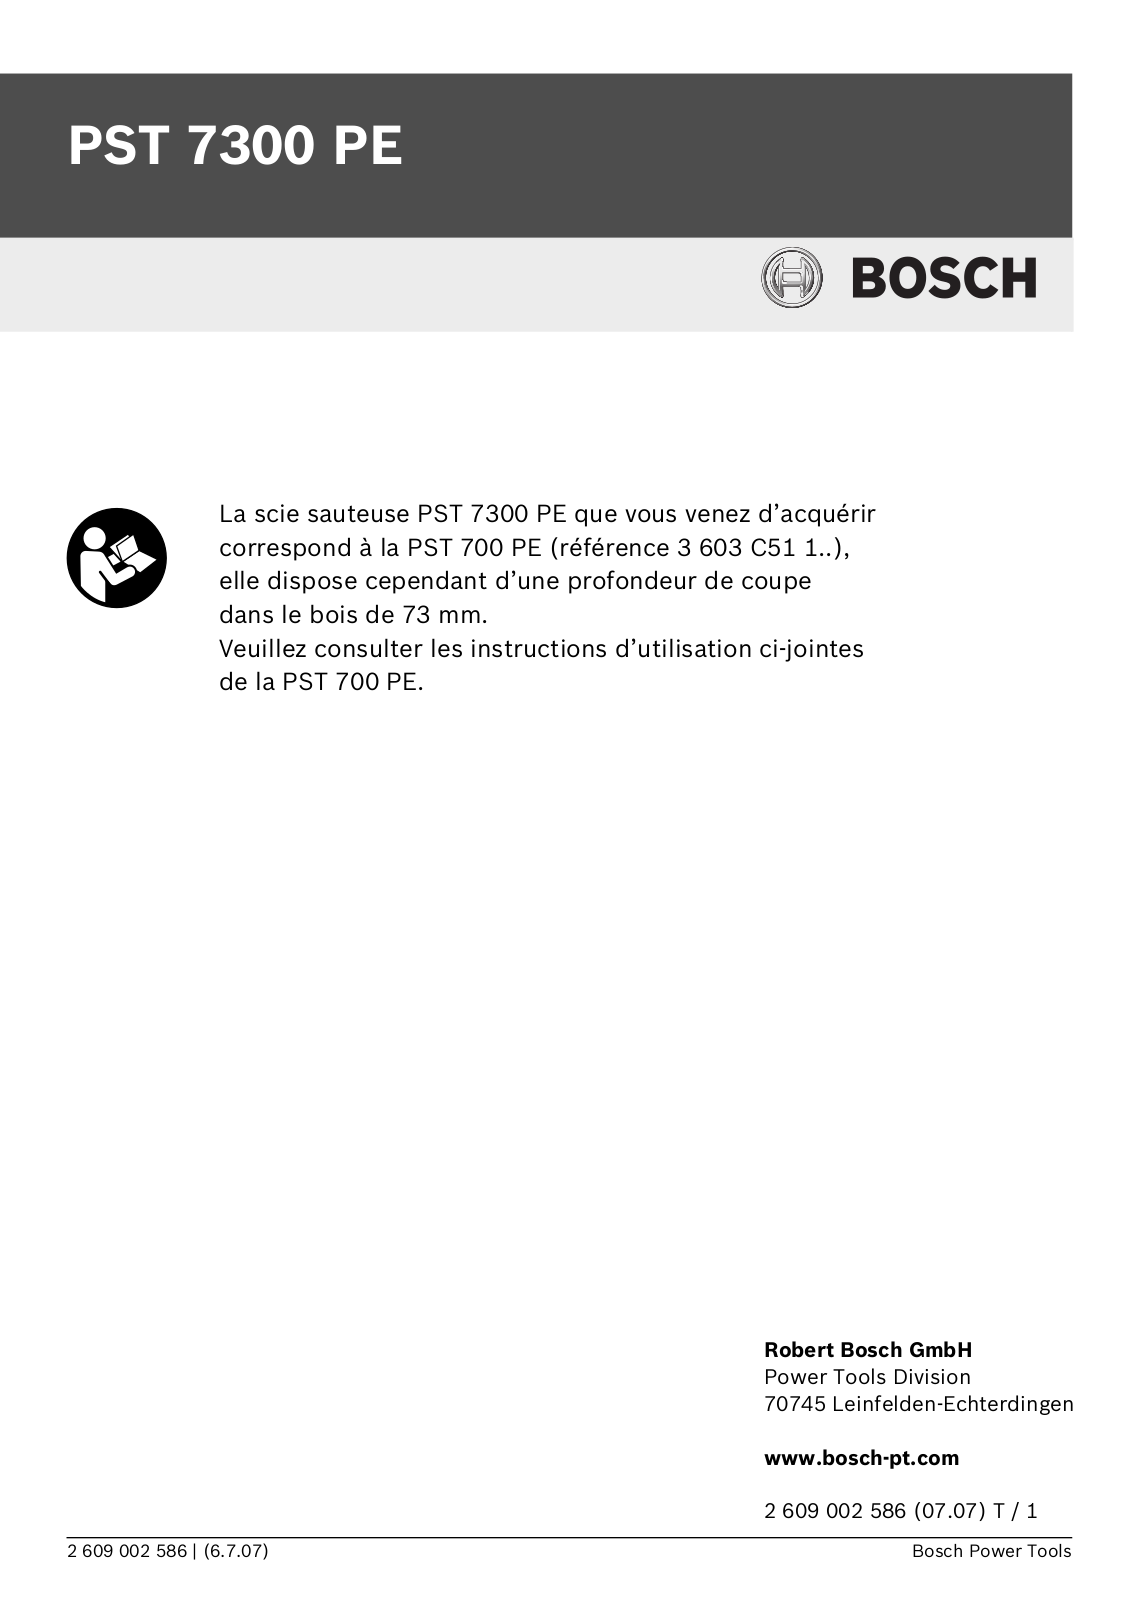 BOSCH PST 7300 PE User Manual